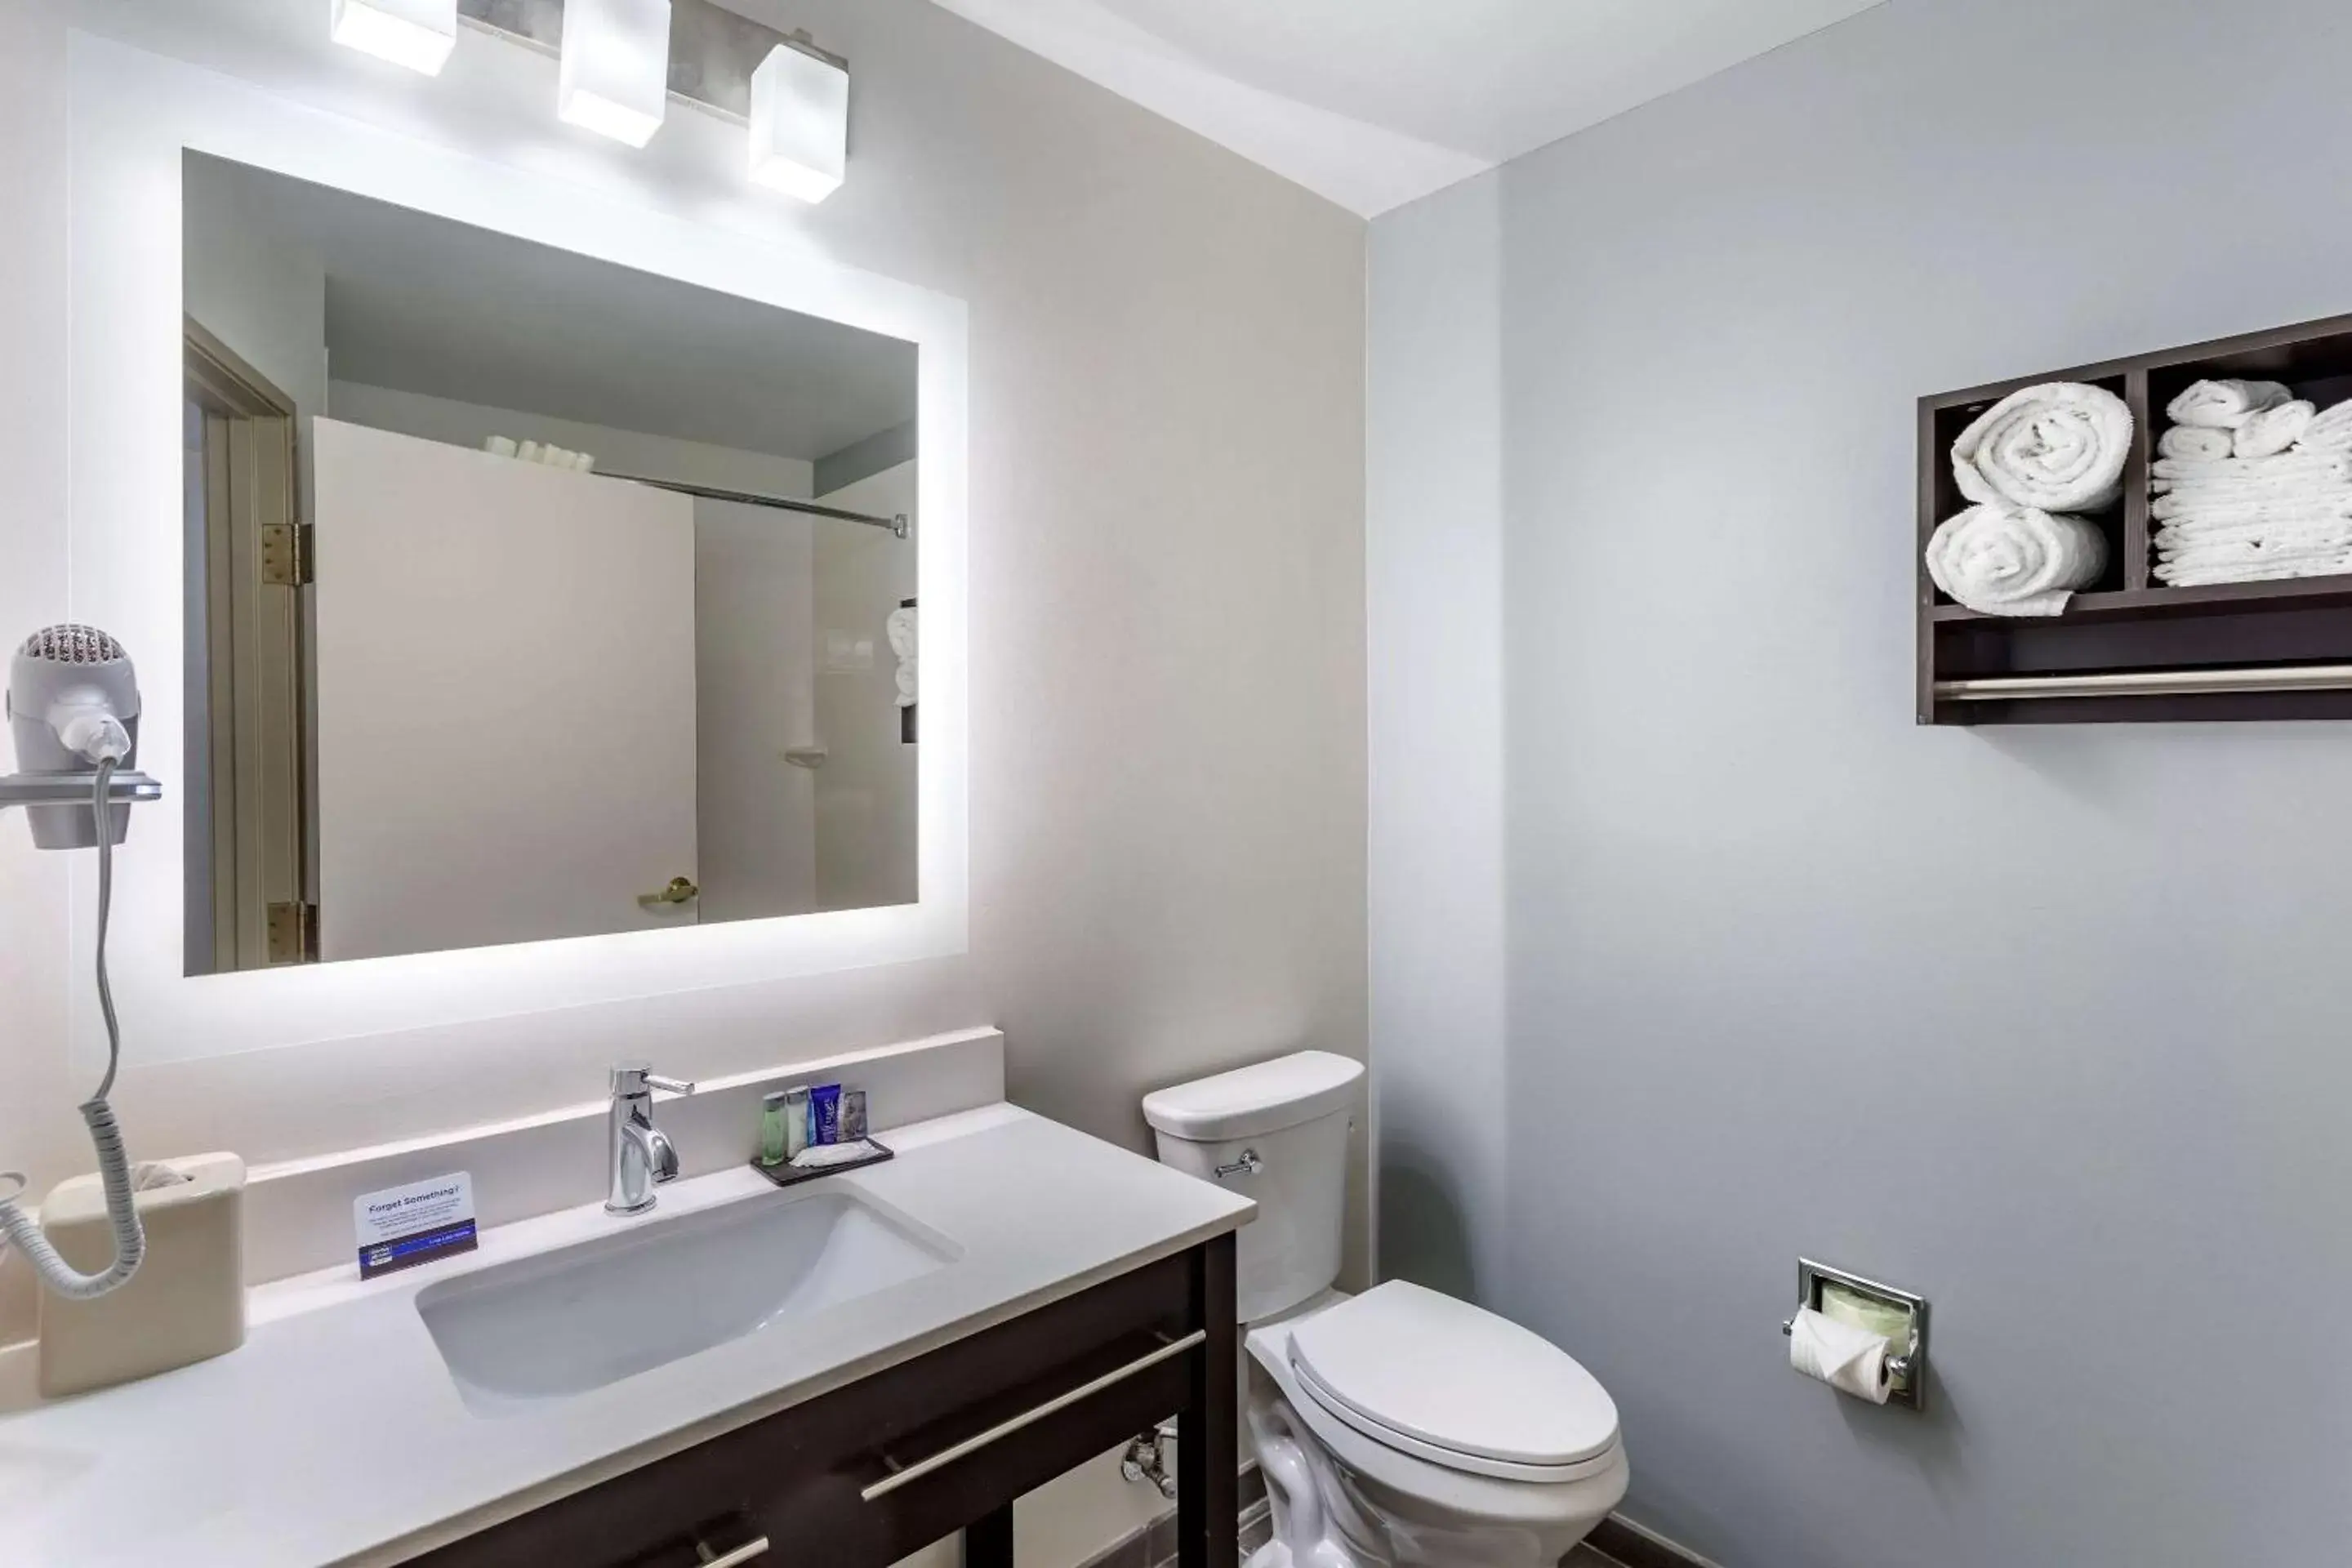 Bathroom in MainStay Suites Lebanon - Nashville Area